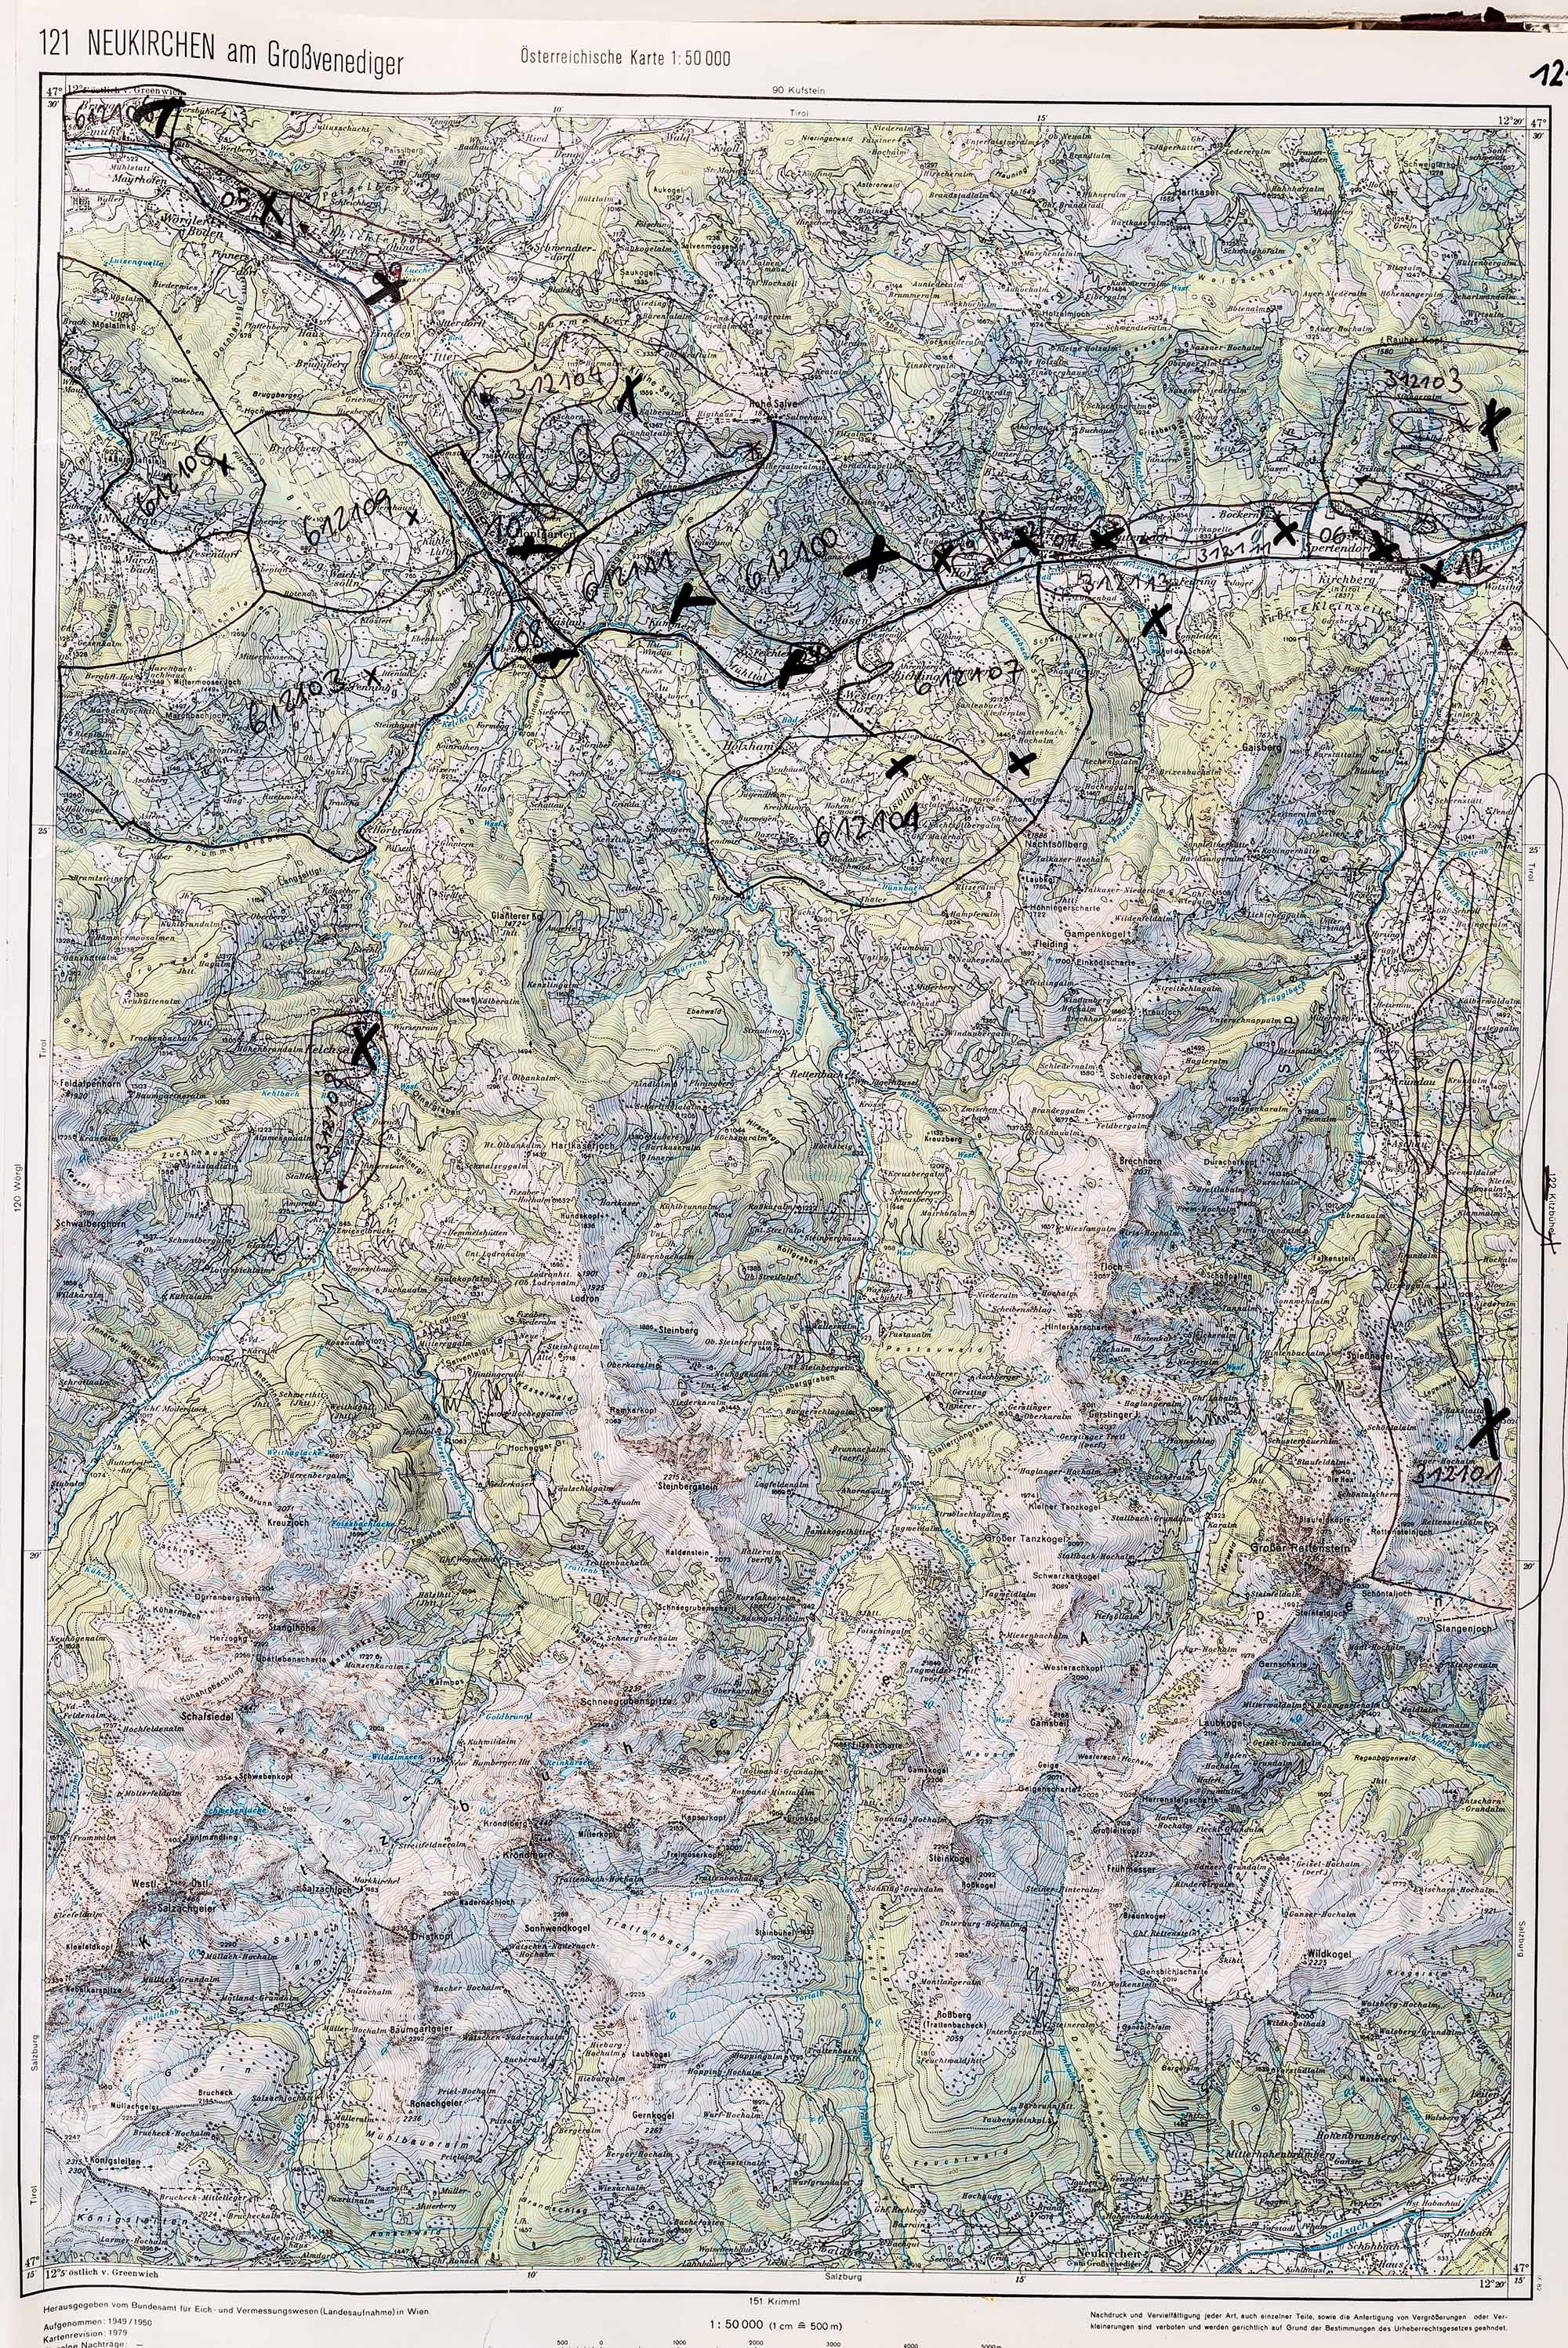 1983-1986 Karte 121